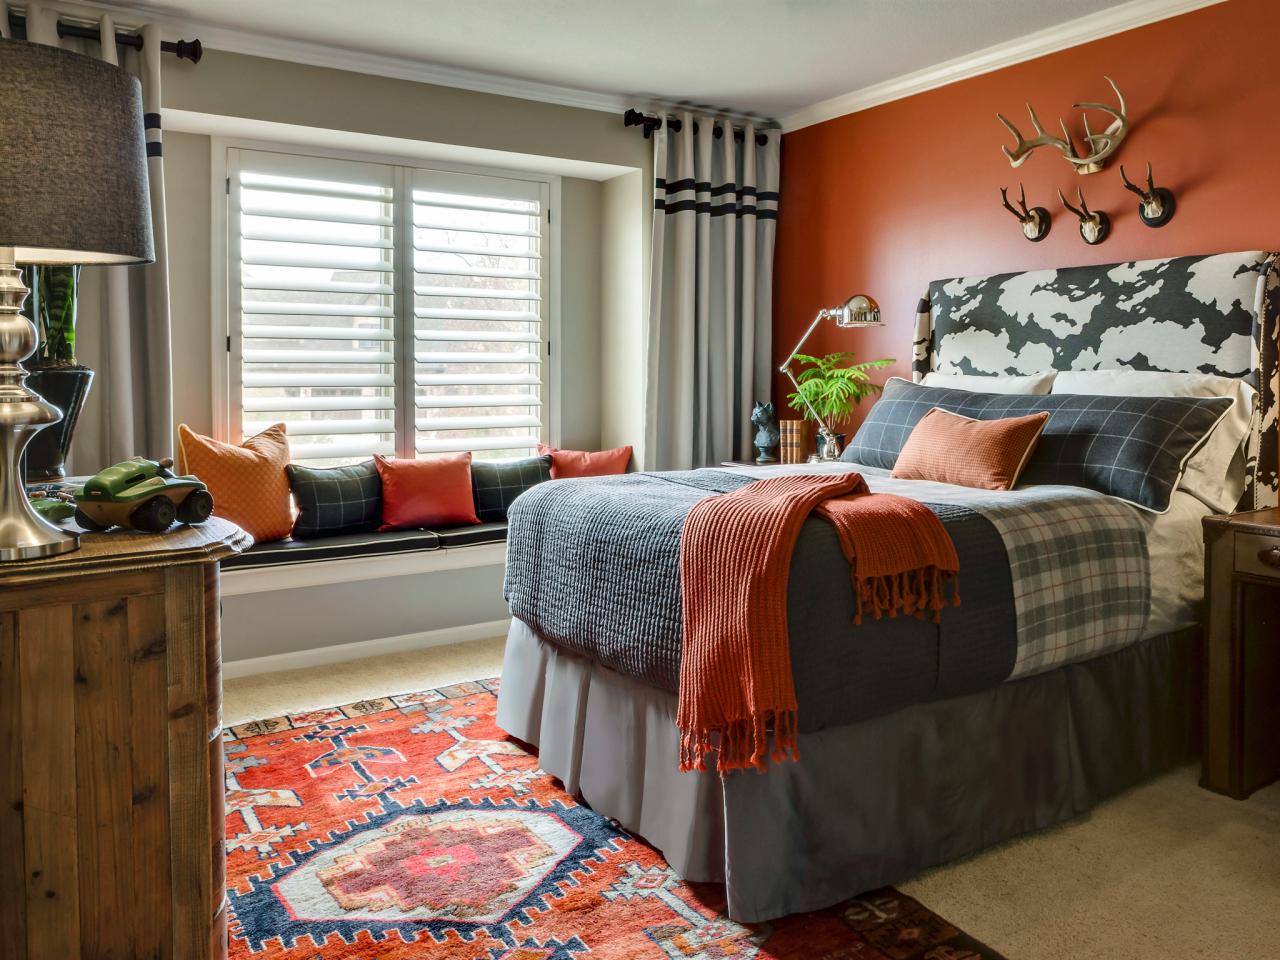 style moderne chambre ado garçon grand lit gris orange draps unisexe lampe tapis coloré moderne mur orange